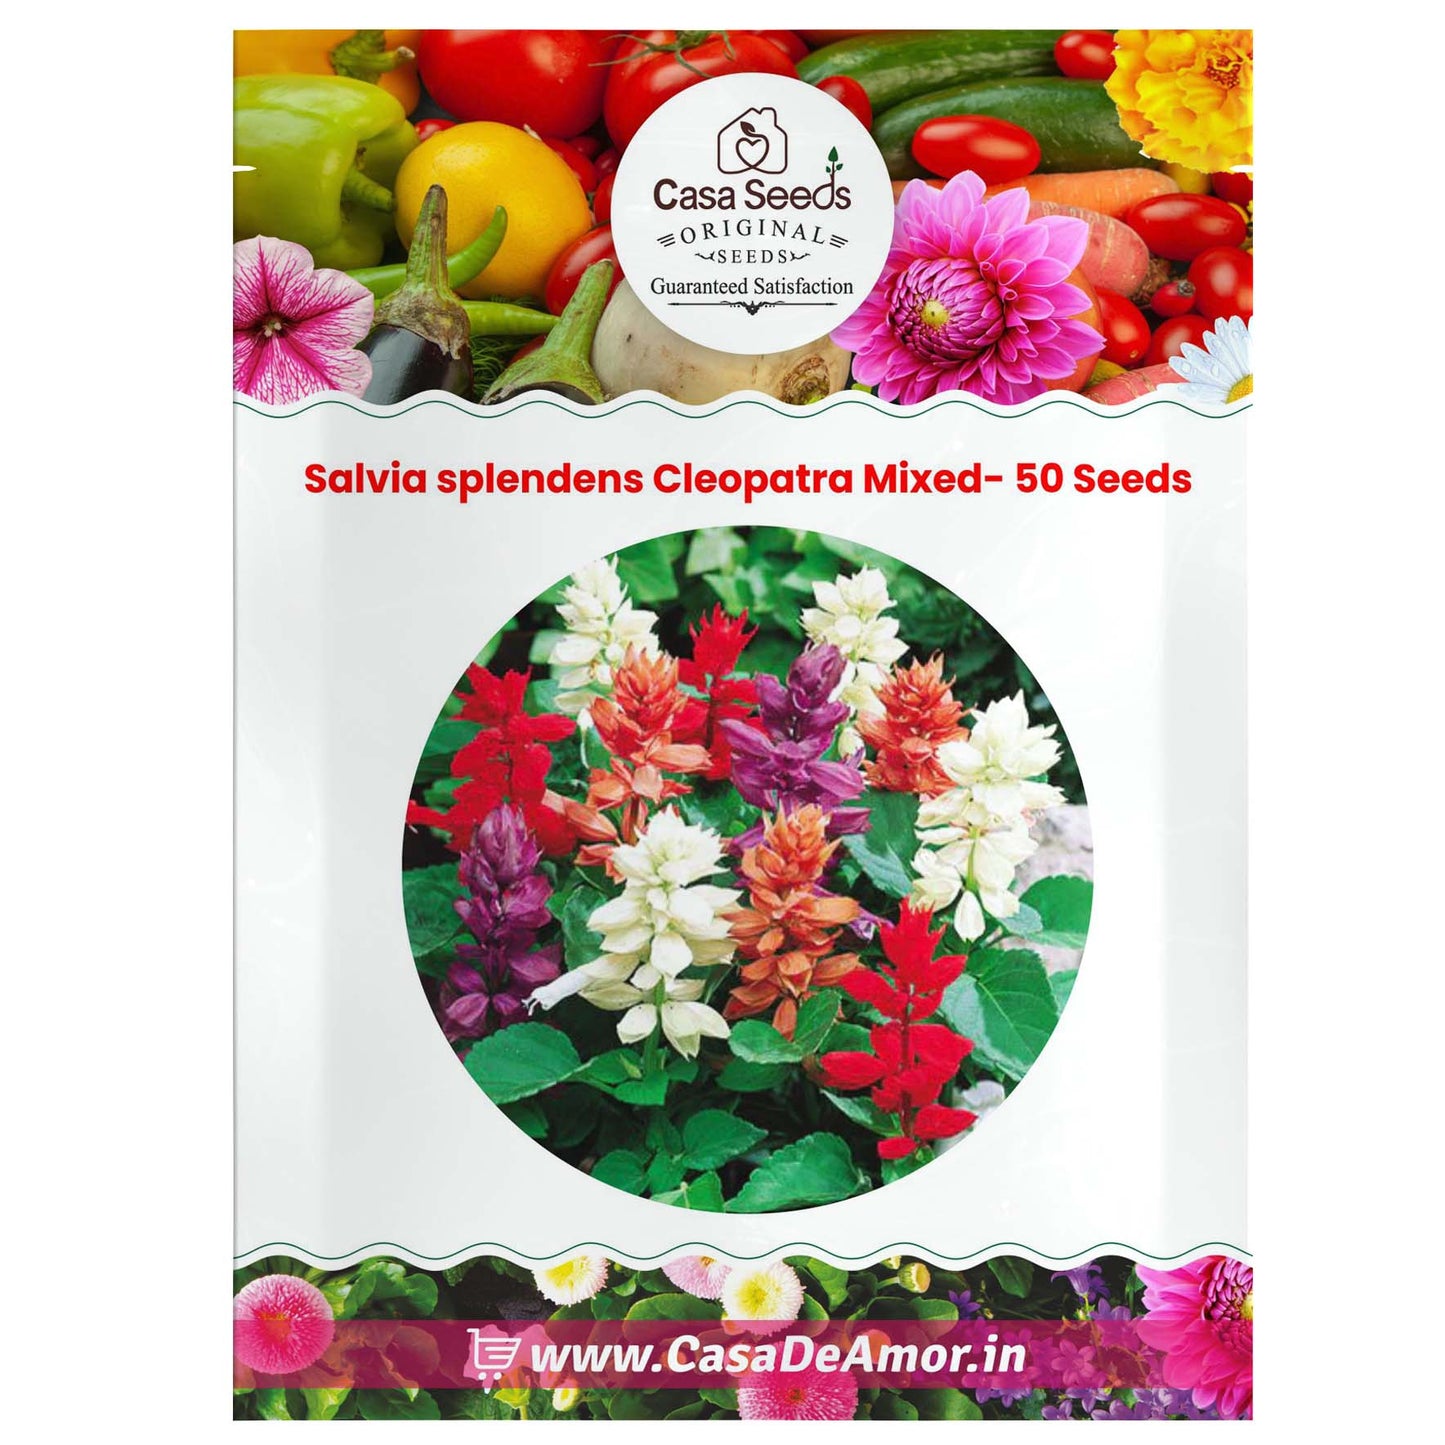 Salvia splendens Cleopatra Mixed- 50 Seeds